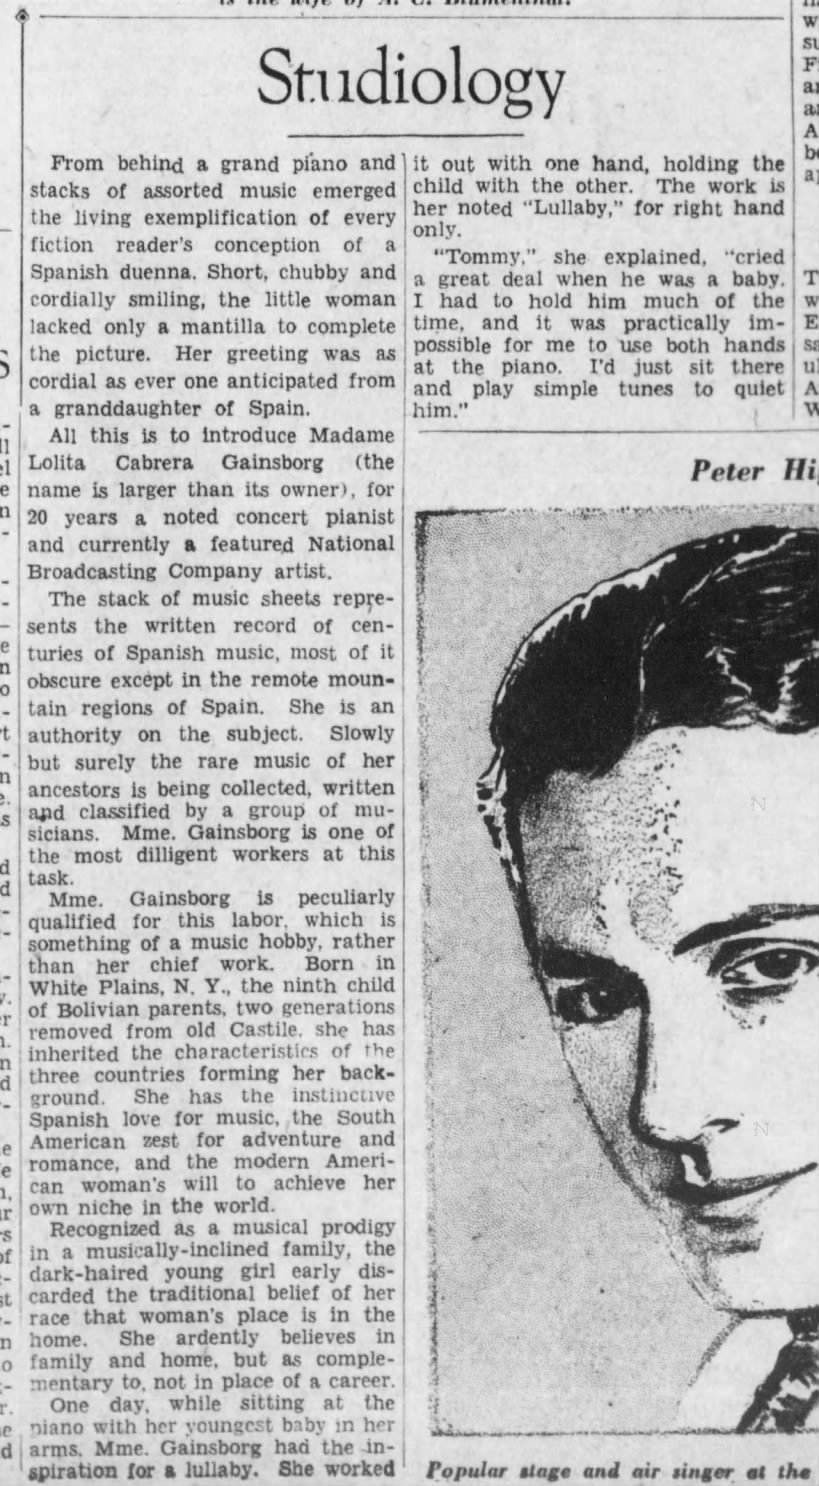 Studiology. The Brooklyn Daily Eagle. (Brooklyn, New York) 25 September 1932, p 66